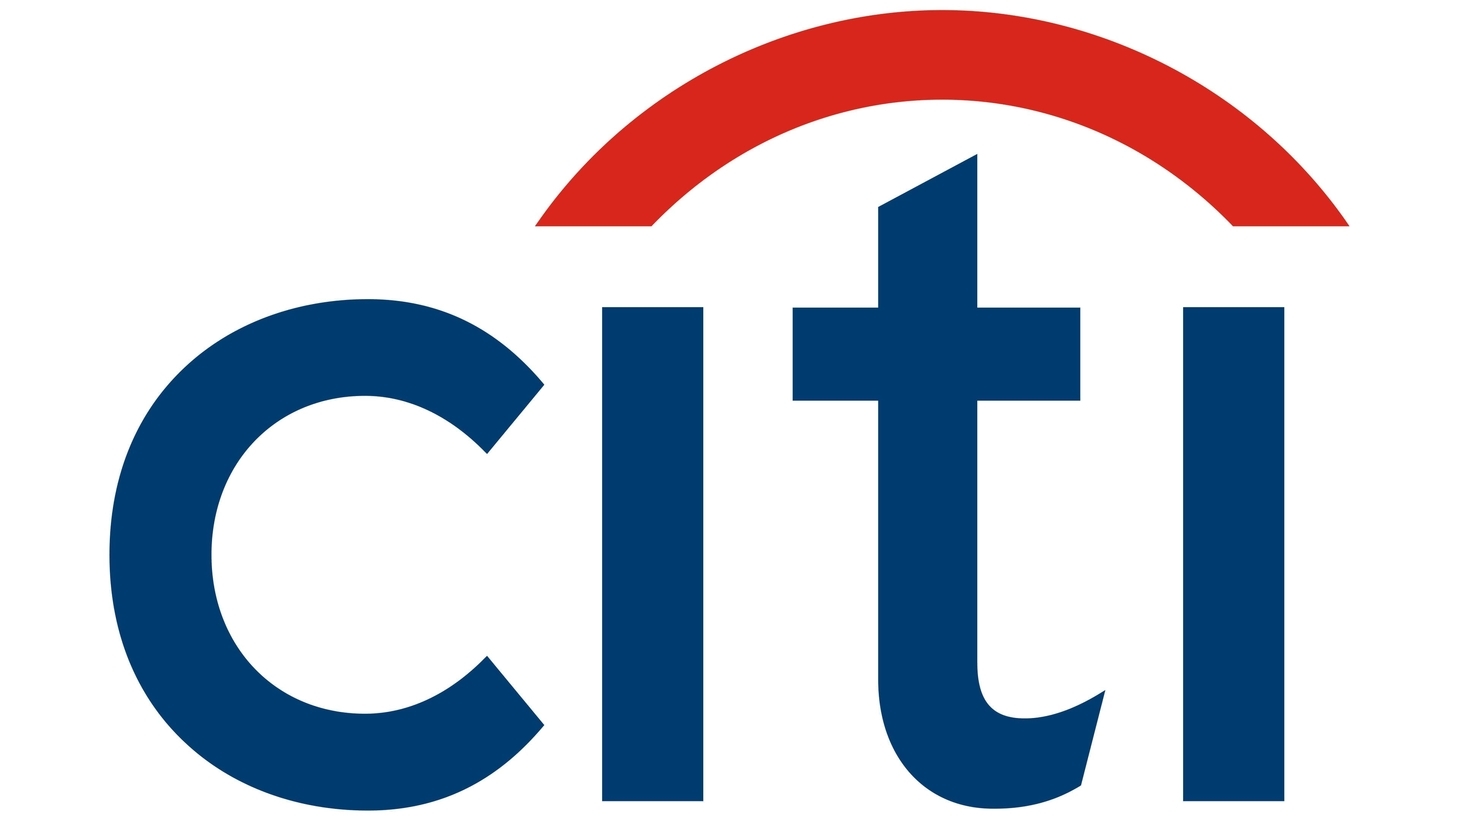 Citigroup sign 2011 present